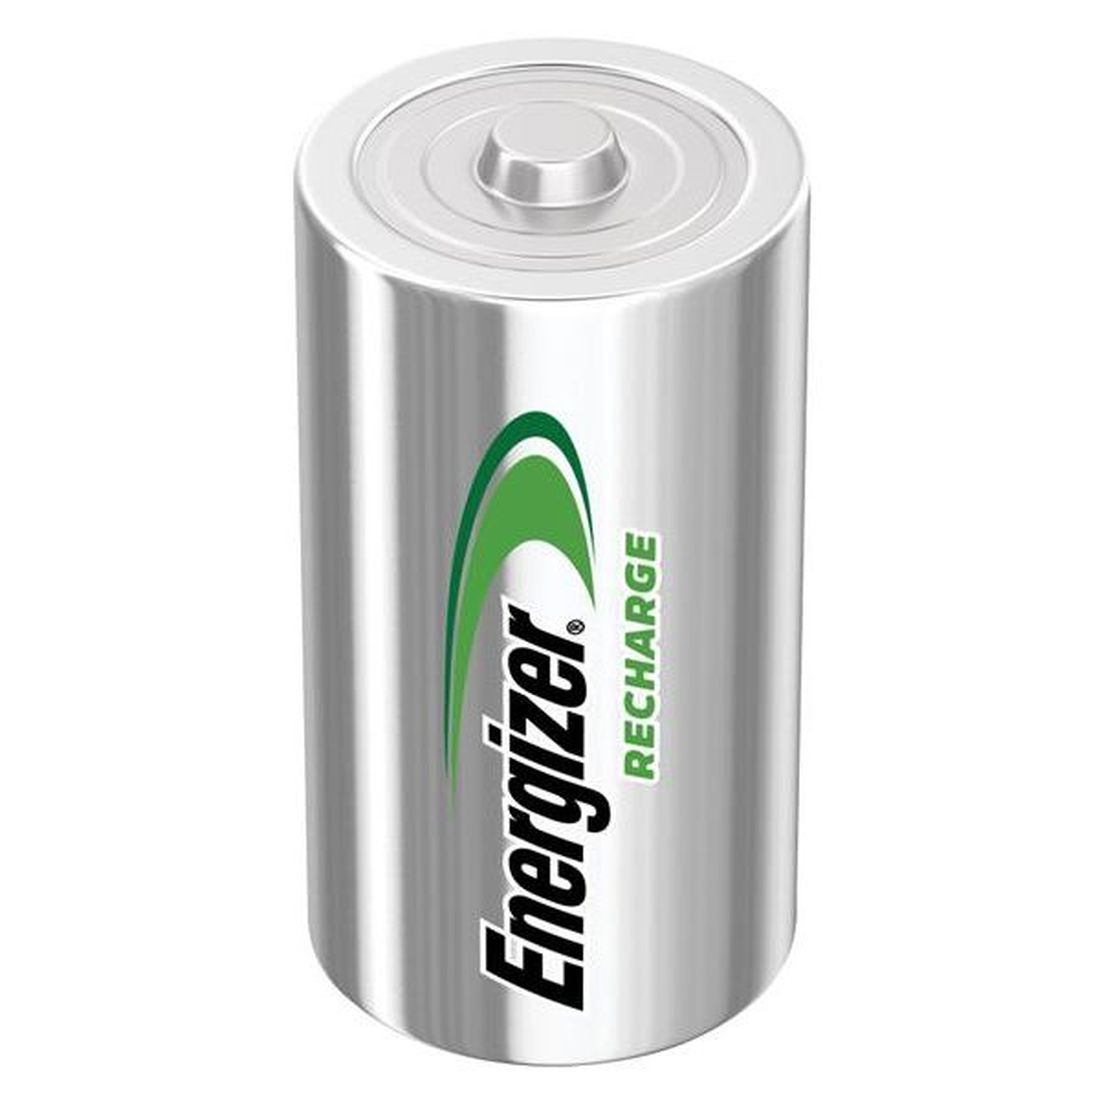 Energizer Recharge Power Plus D Cell Batteries RD2500 mAh (Pack 2)                        